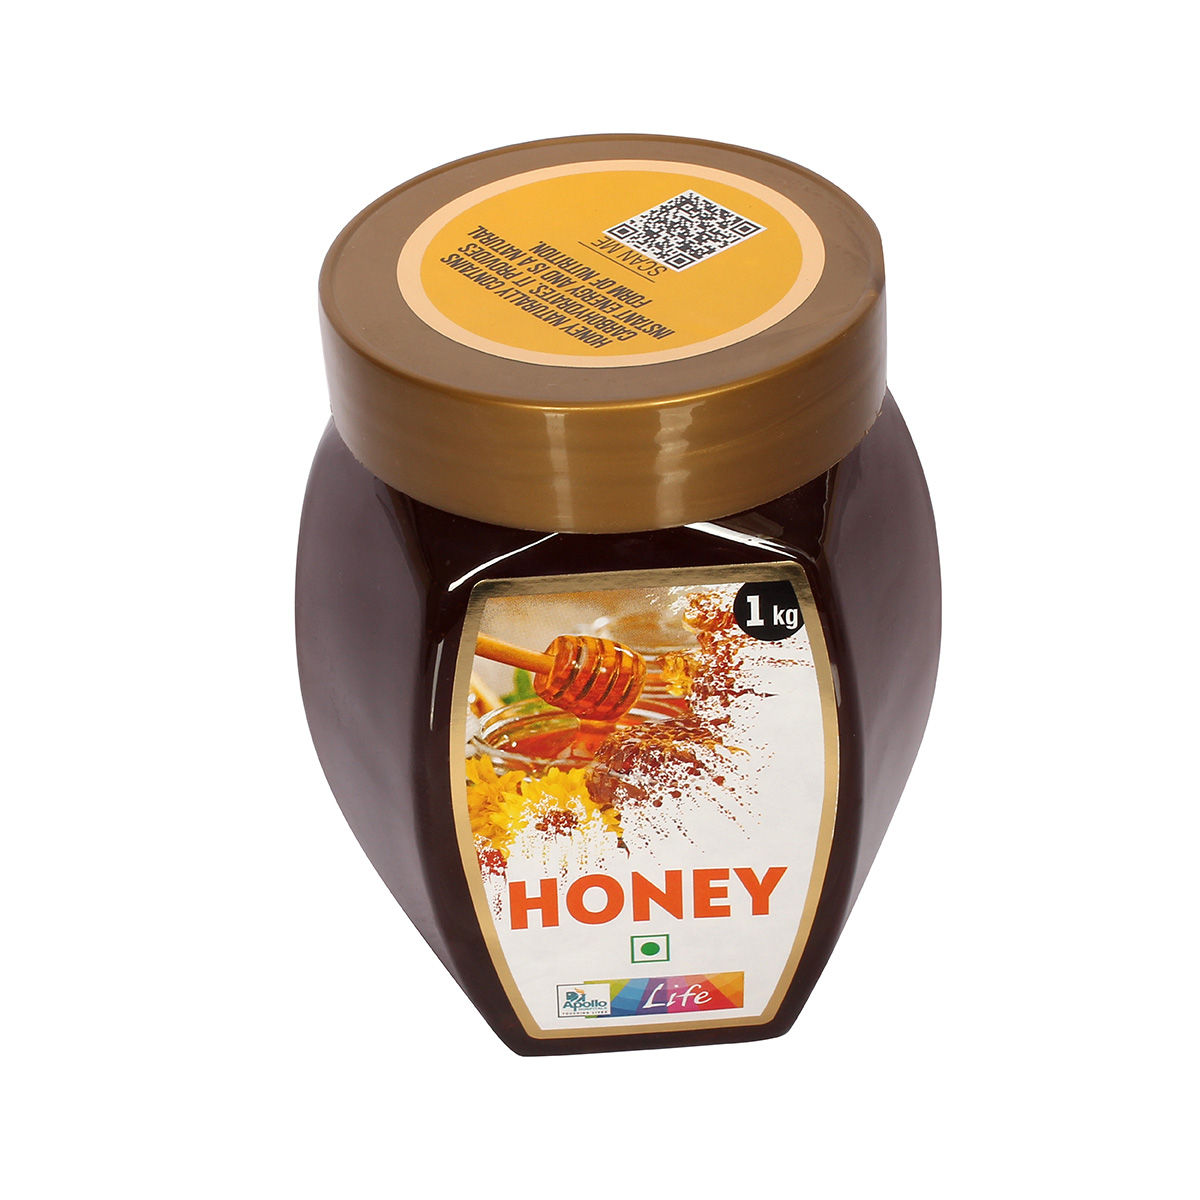 Apollo Life Honey, 1 kg, Pack of 1 